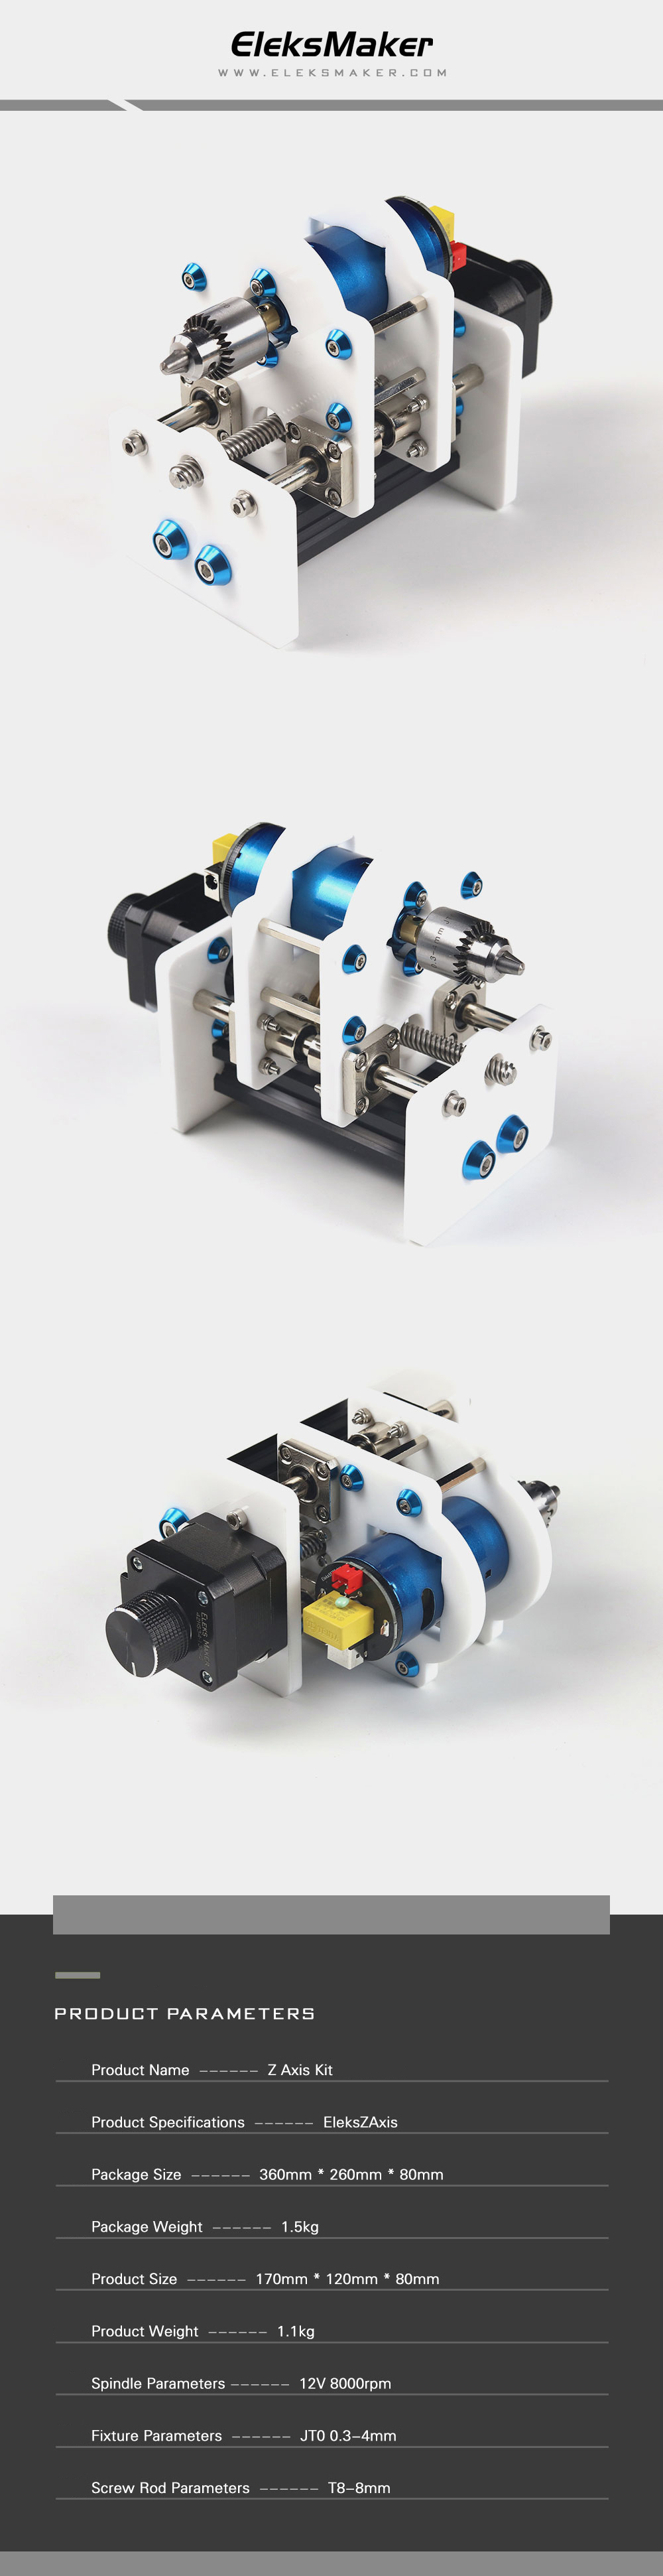 EleksMaker® EleksZAxis Z Axis & Spindle Motor Drill Chunk Integrated Set DIY Upgrade Kit for Laser Engraver CNC Router 6